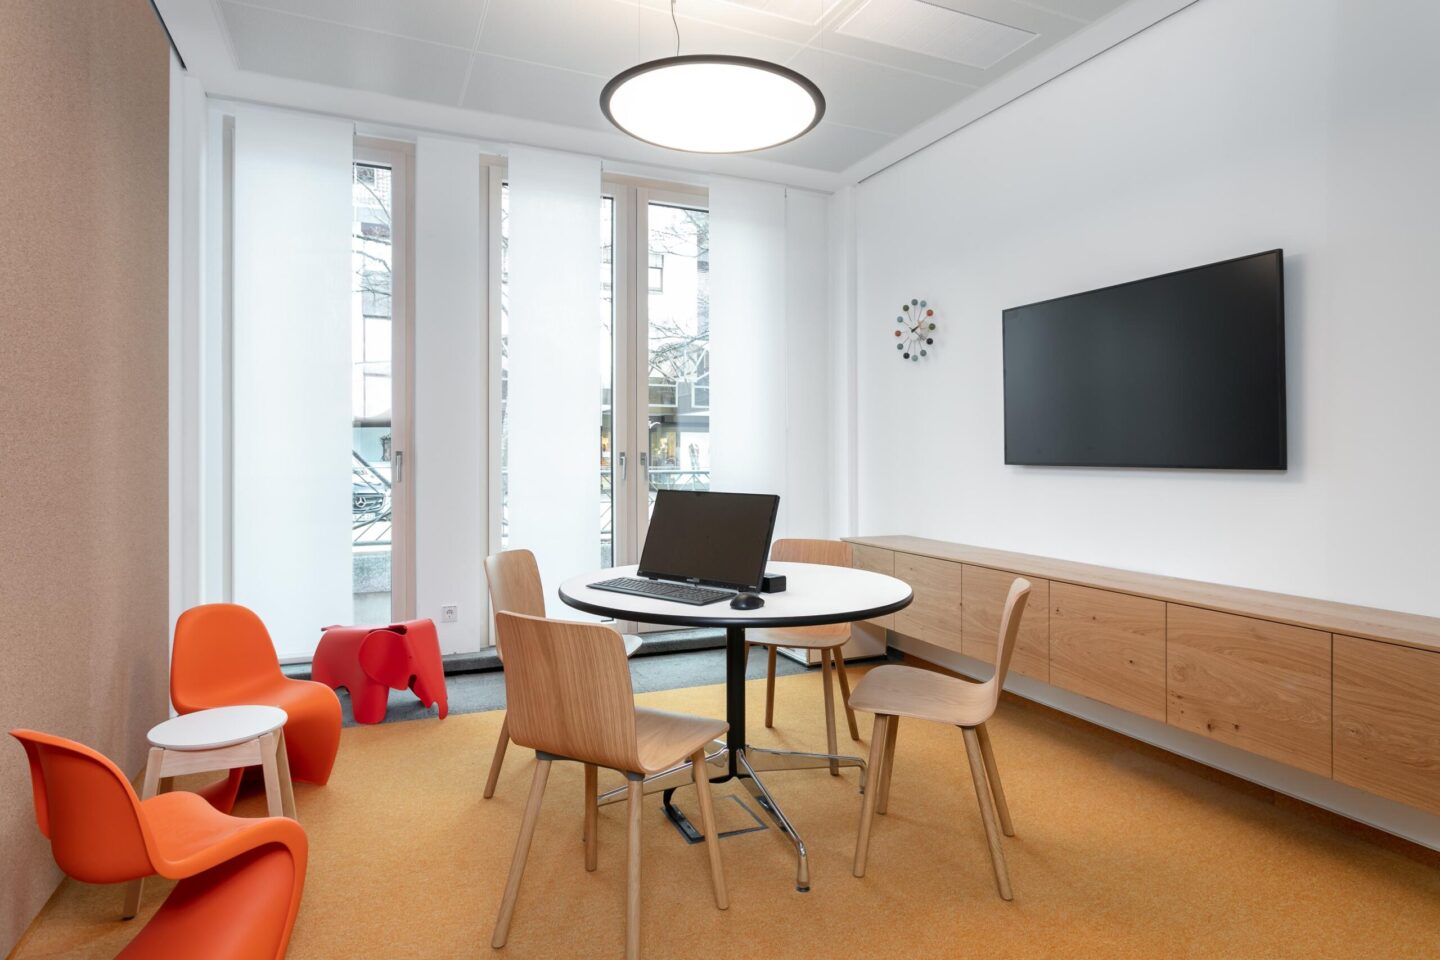 Sparkasse Bühl – Main Office │ seminar chairs │ new feel-good rooms